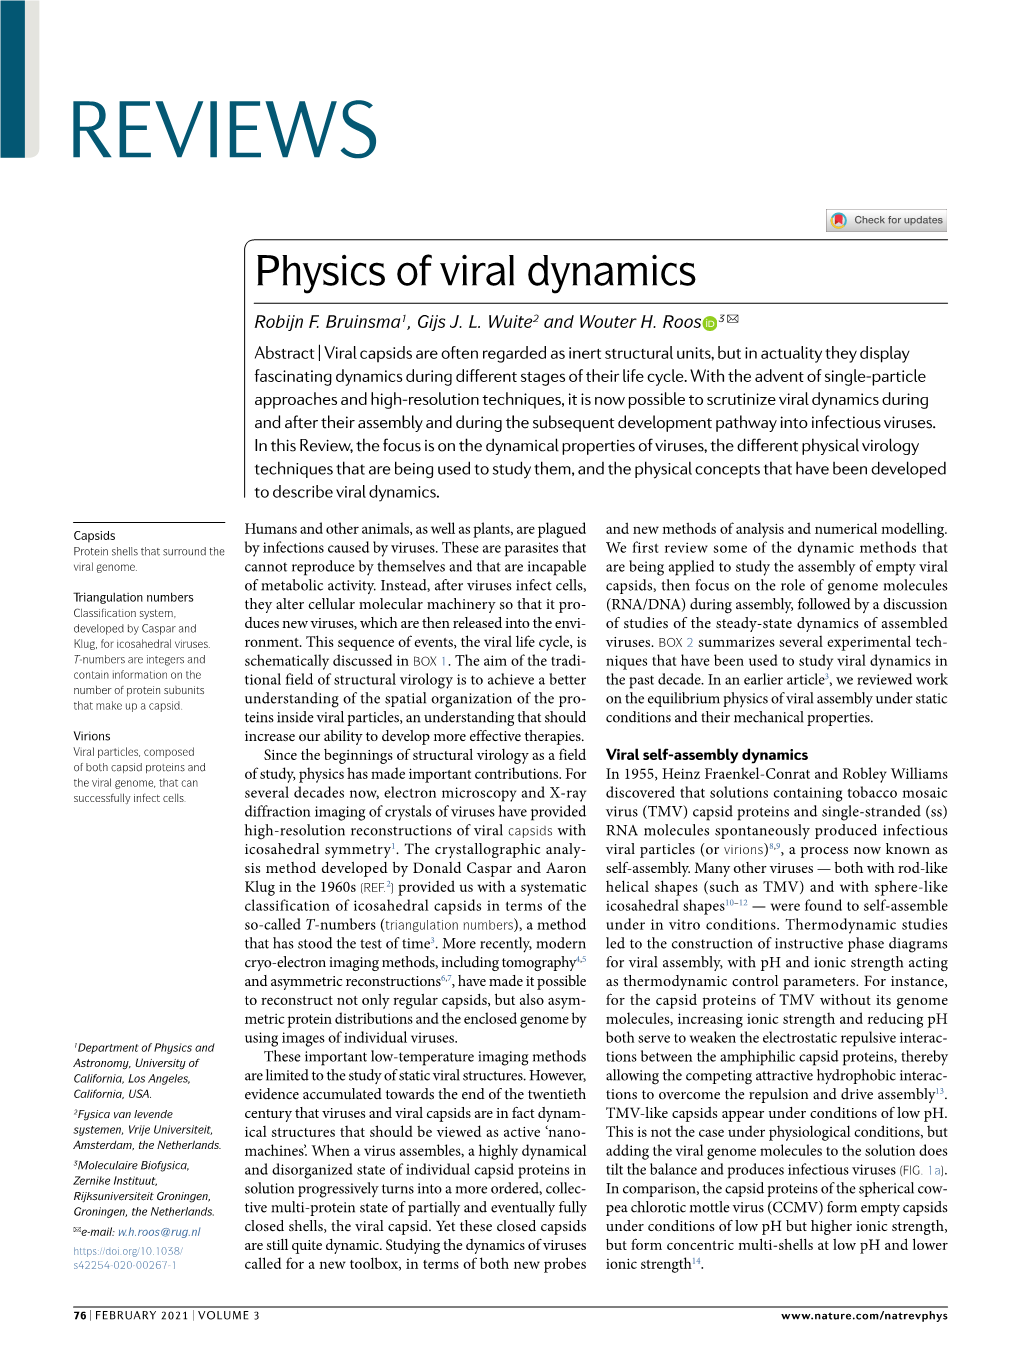 Physics of Viral Dynamics